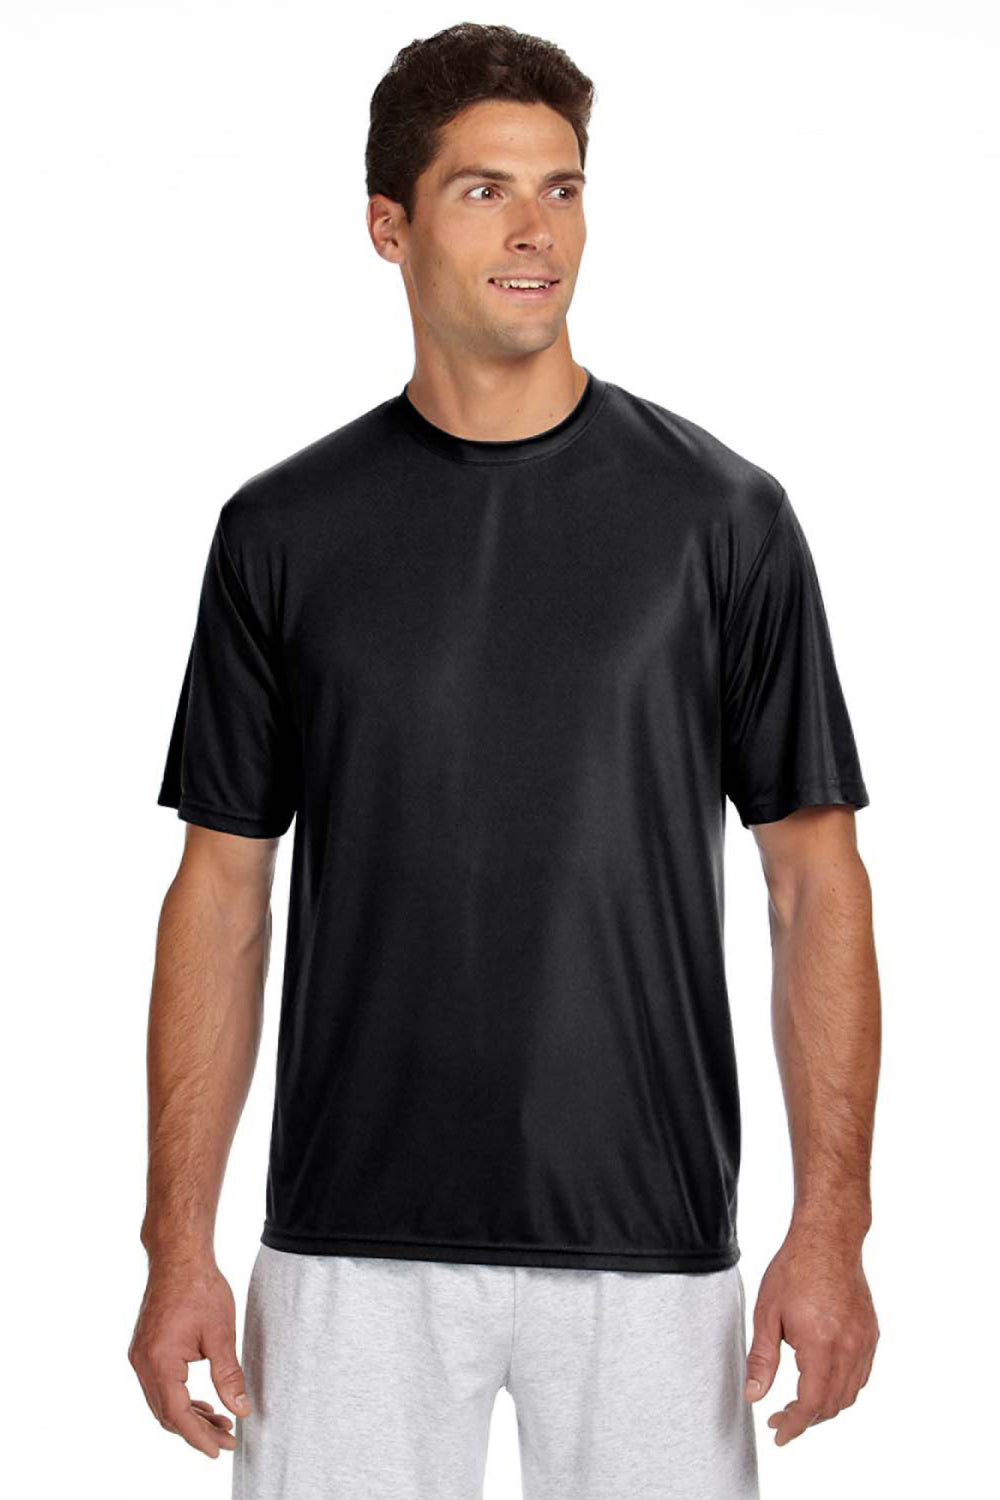 A4 N3142 Mens Performance Moisture Wicking Short Sleeve Crewneck T-Shirt Black Model Front